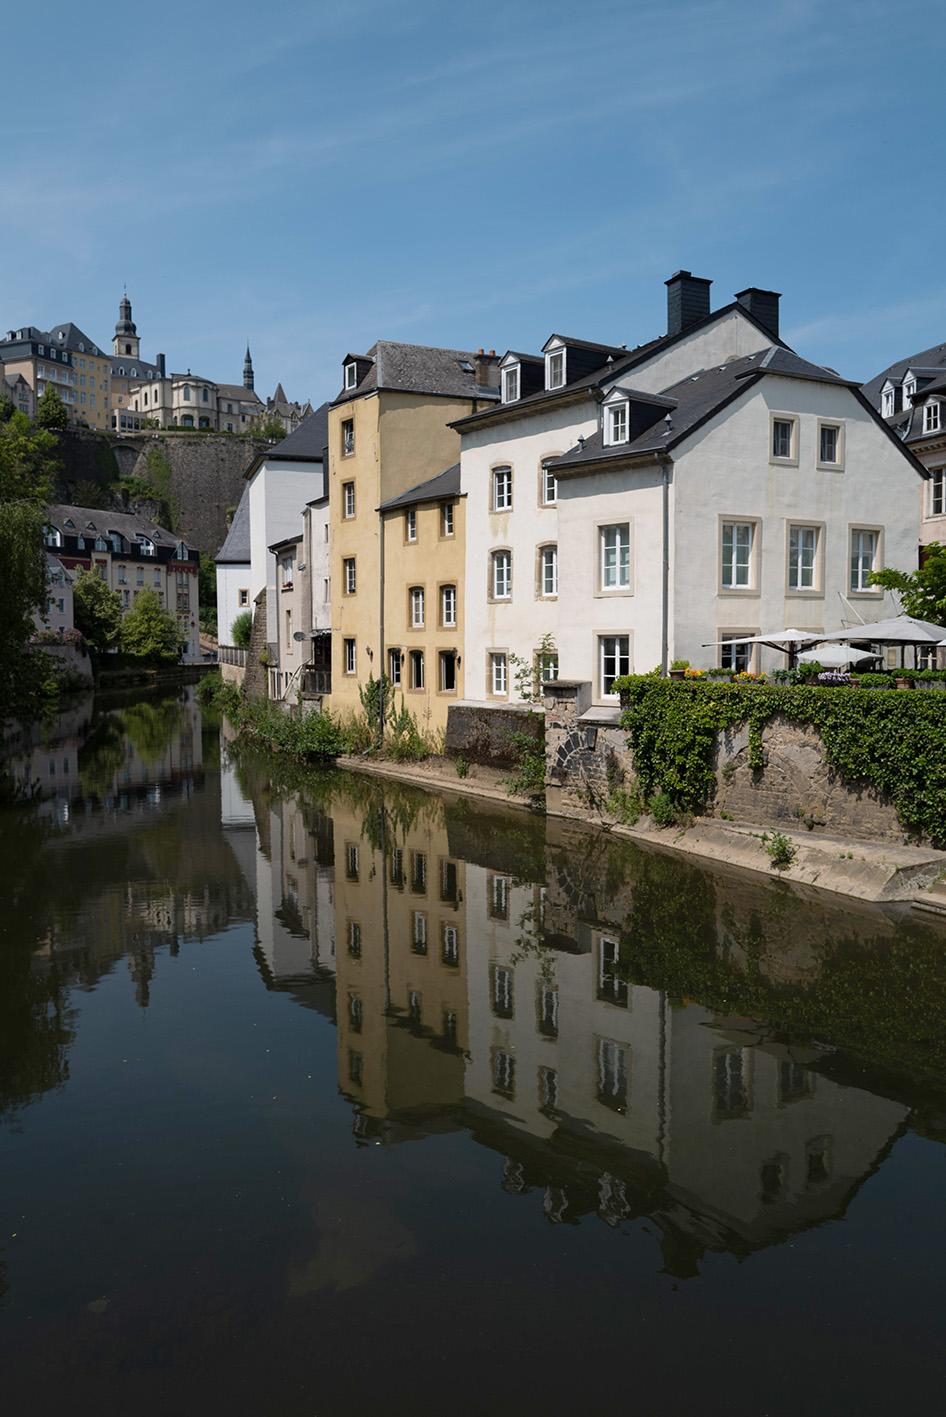 luxemburg (land)